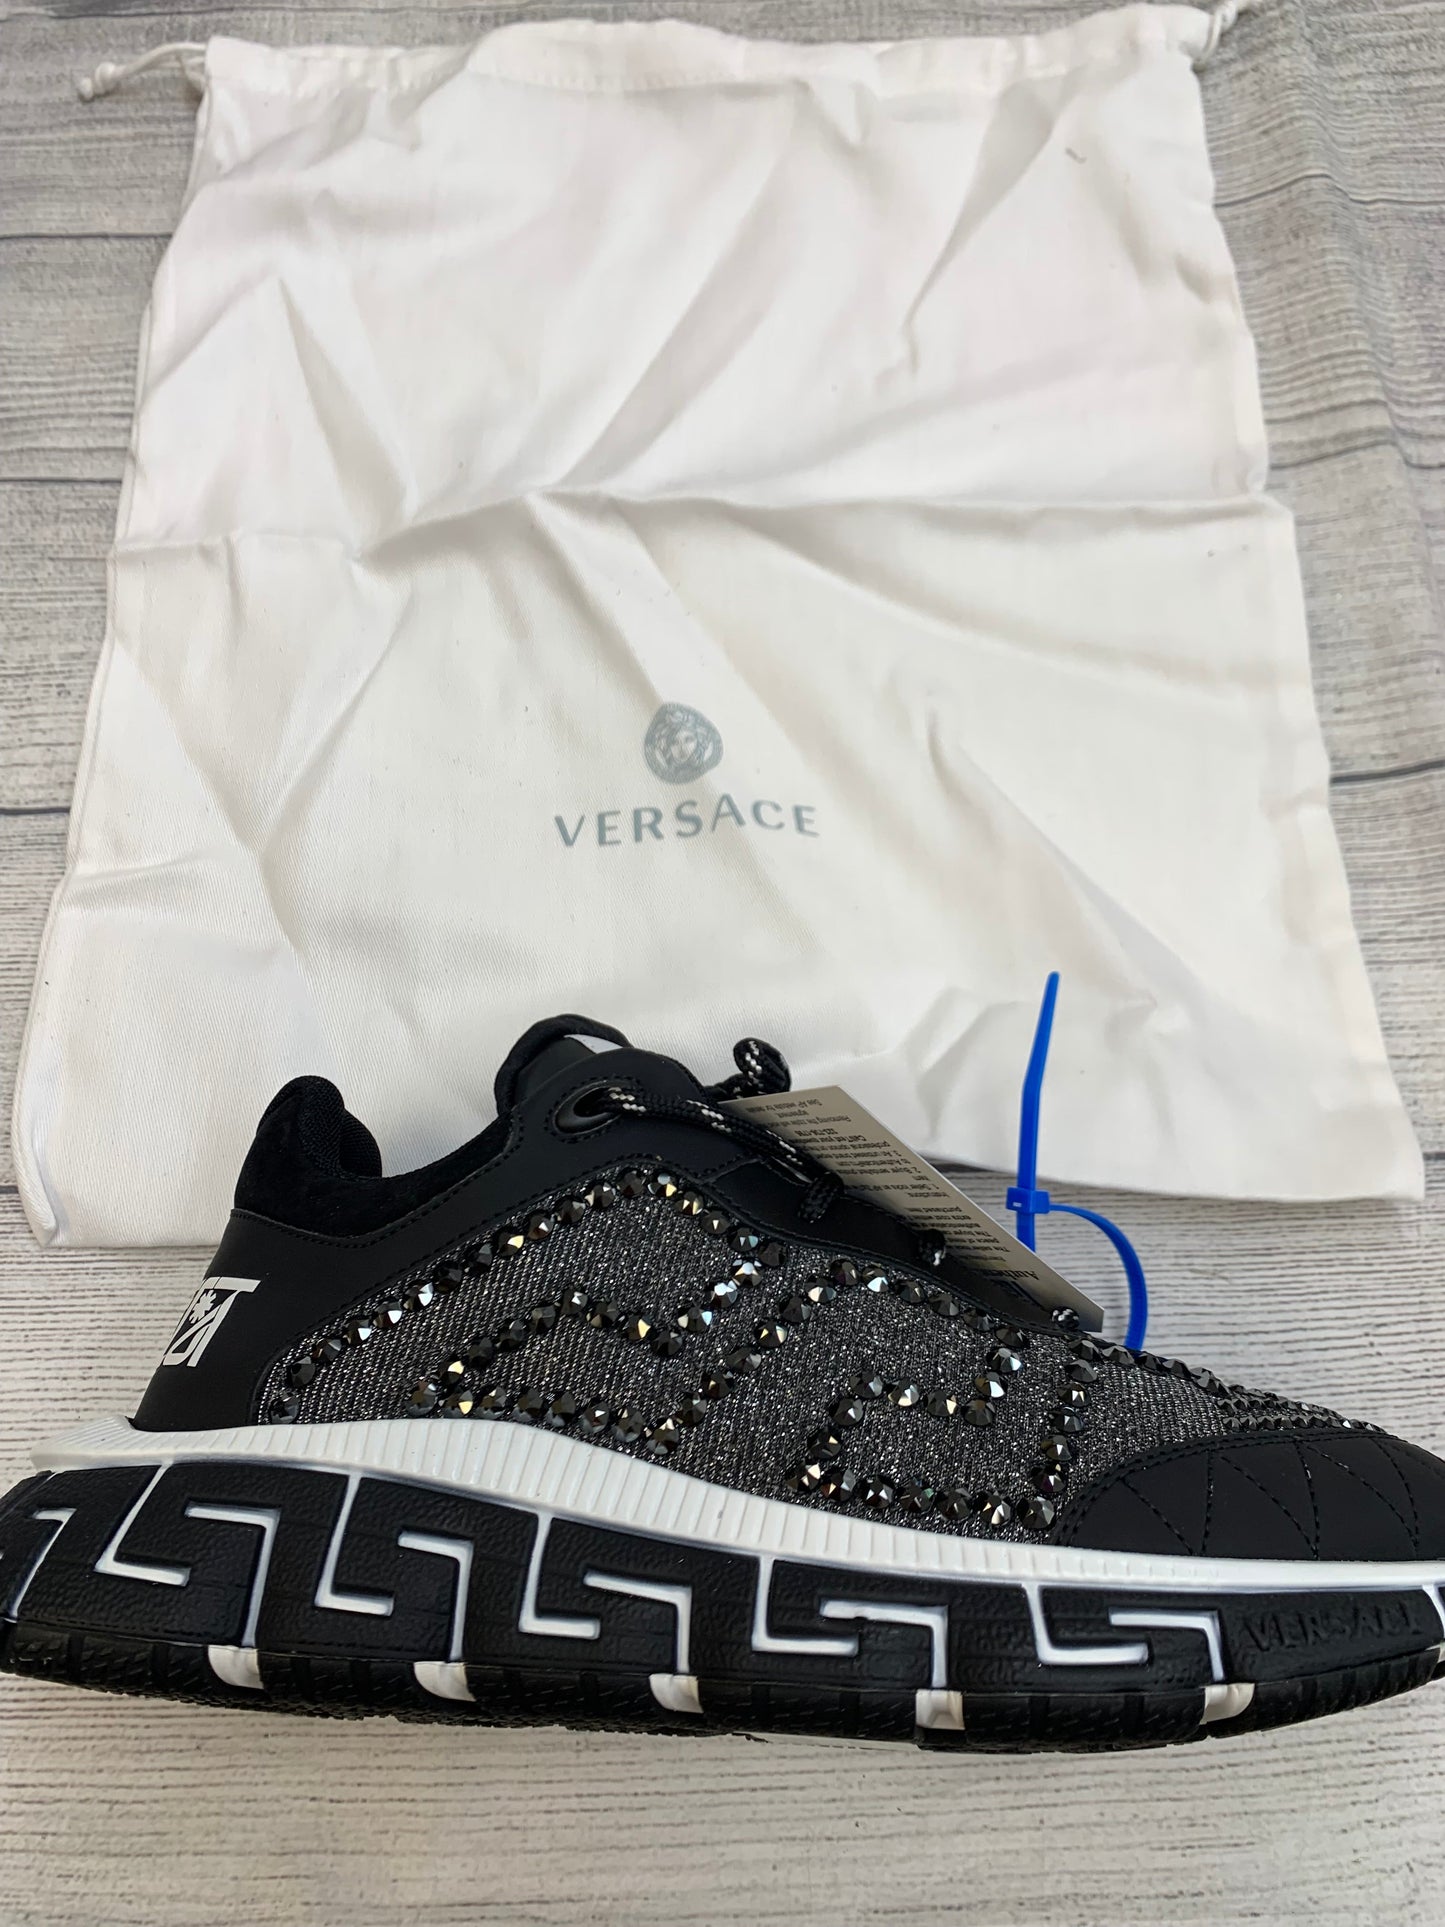 Black Shoes Designer Versace, Size 9.5